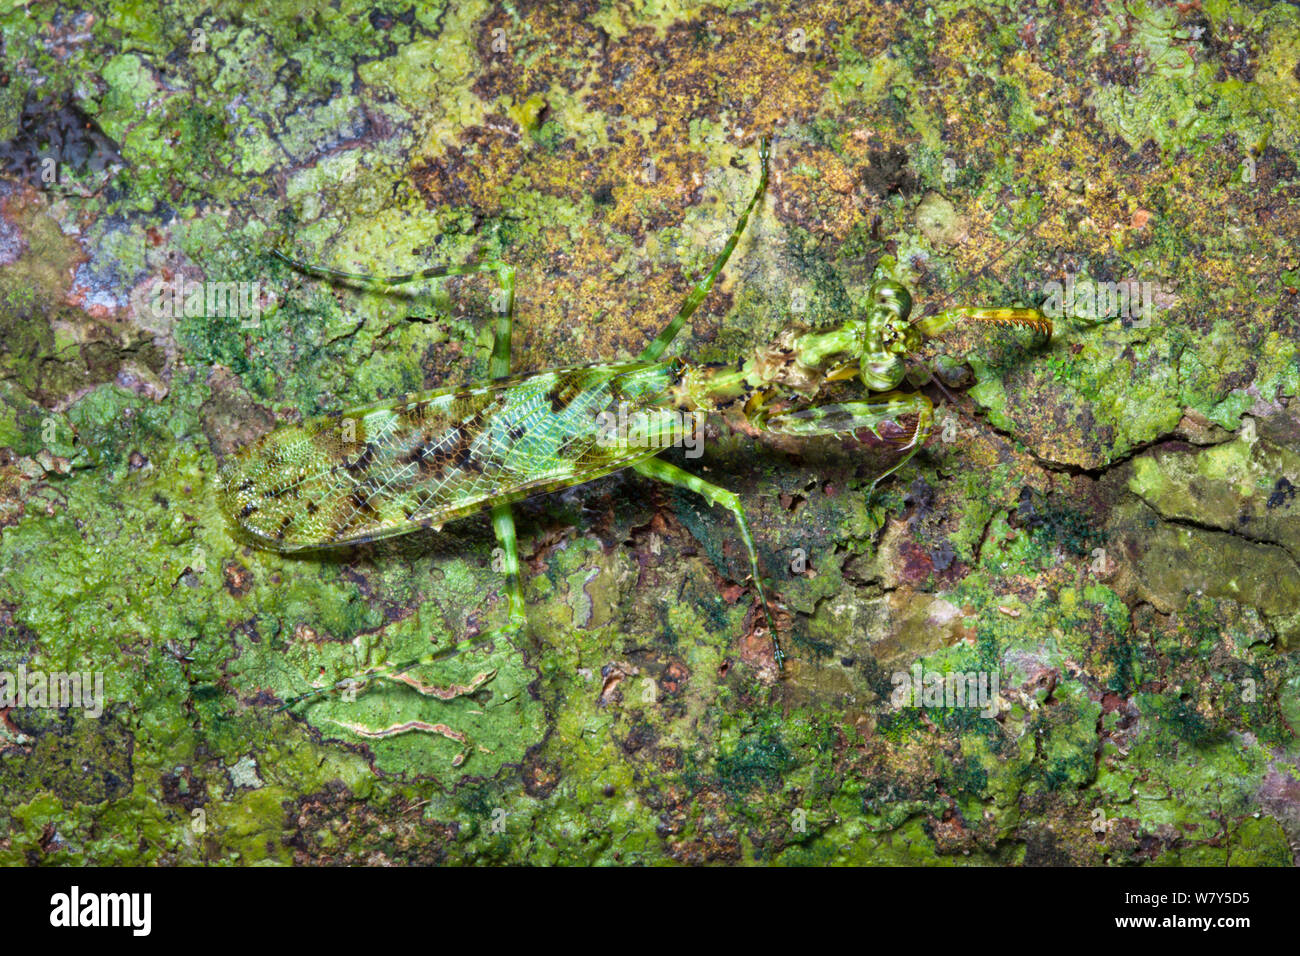 Green praying mantis (Majangella moultoni) camouflaged on algae-covered tree trunk. Danum Valley, Sabah, Borneo. Stock Photo